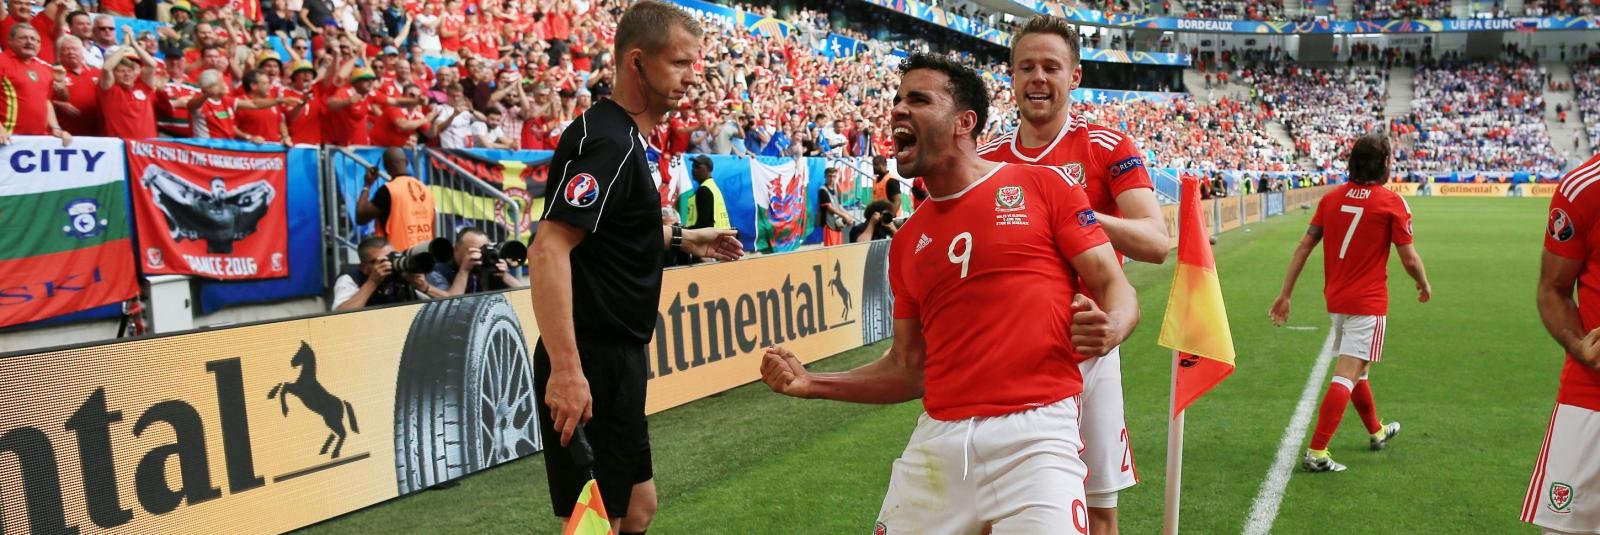 EURO 2016 Semi-Final Head-to-Head: Jose Fonte (Portugal) vs Hal Robson-Kanu (Wales)